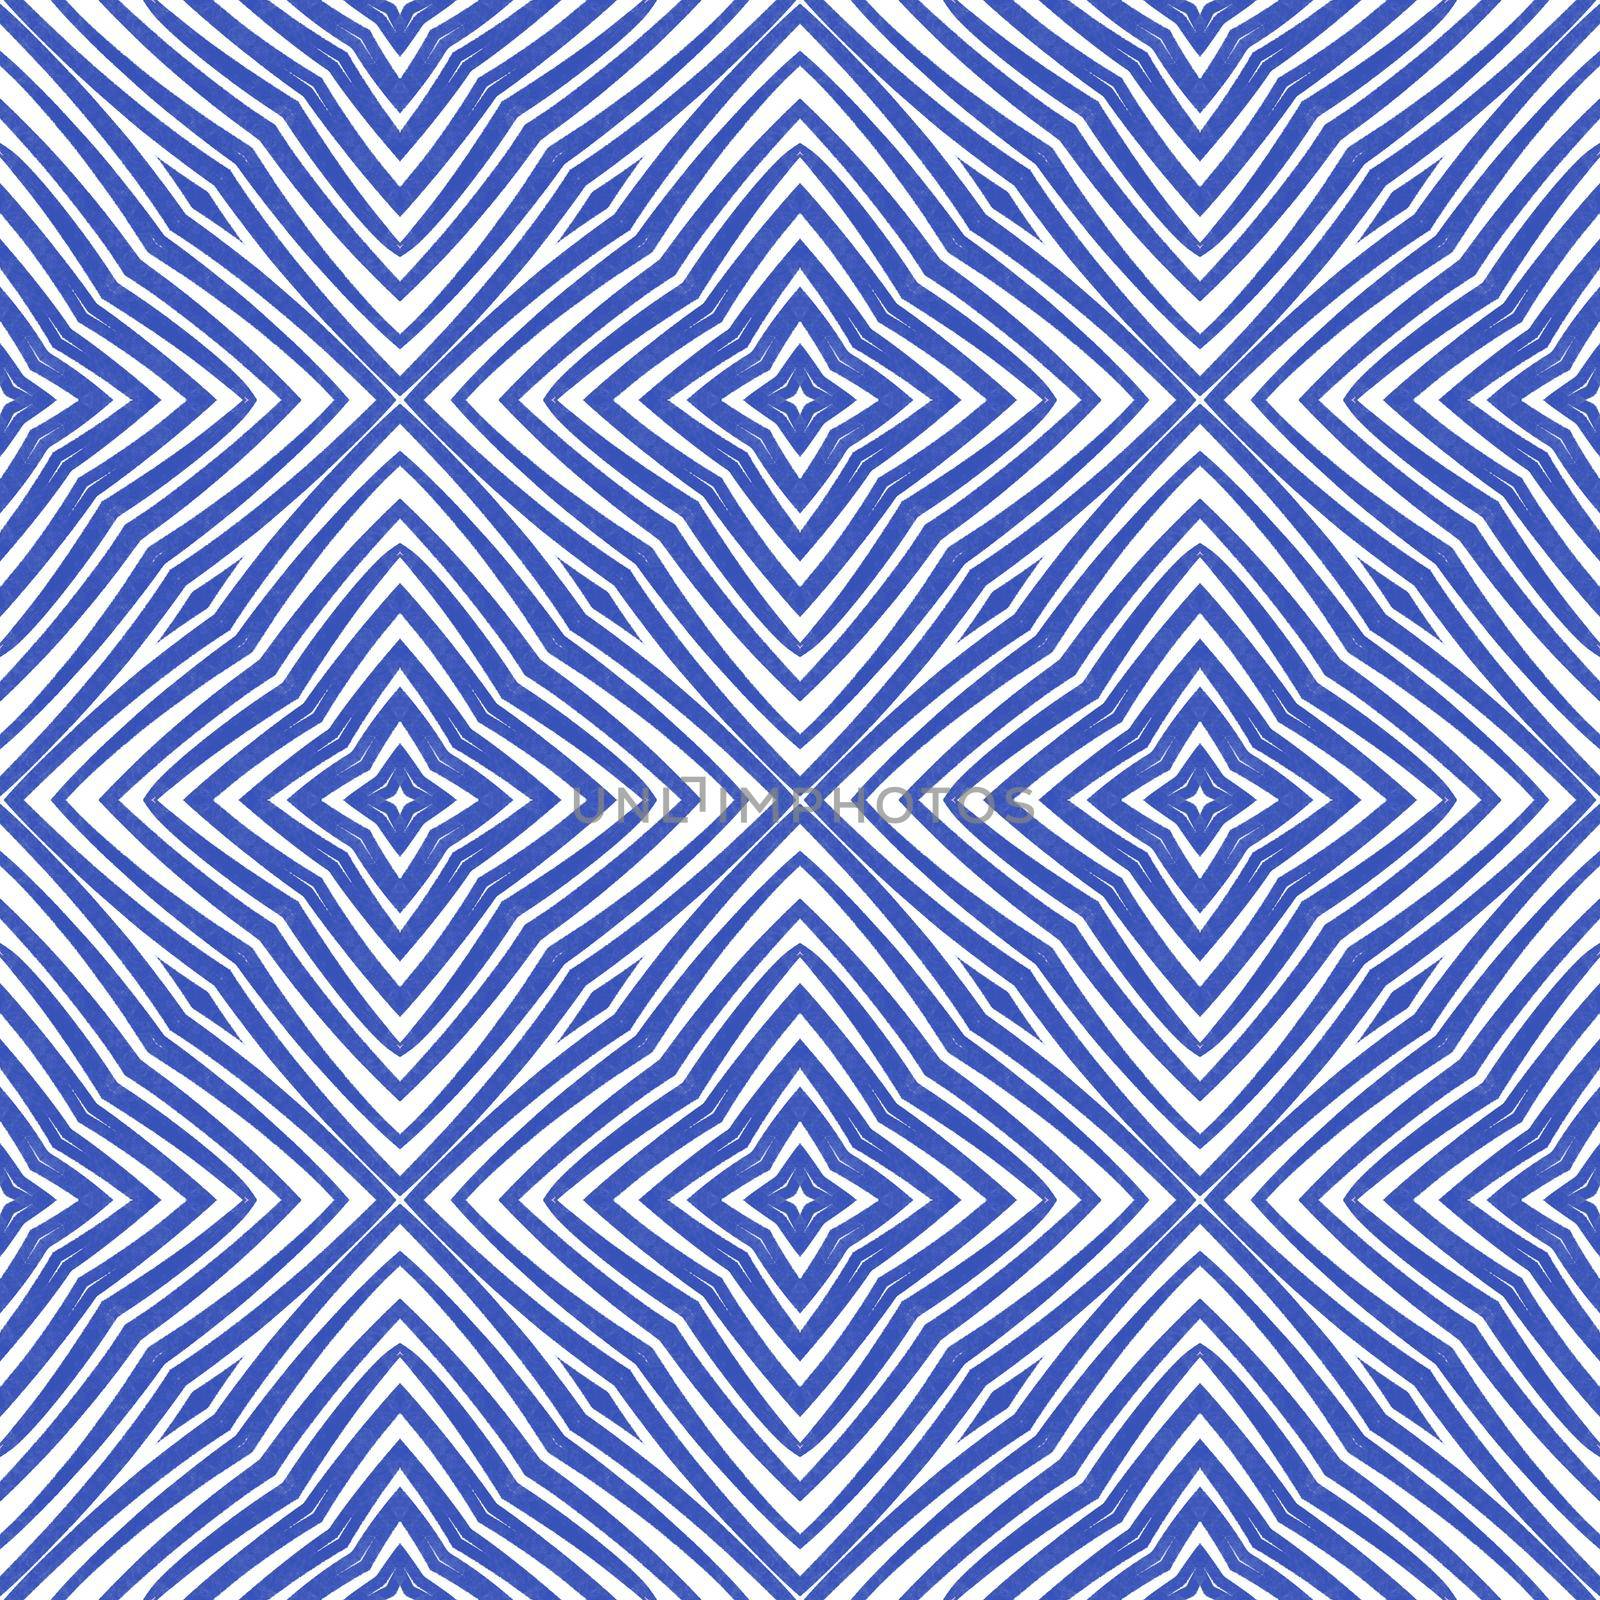 Striped hand drawn pattern. Indigo symmetrical kaleidoscope background. Textile ready astonishing print, swimwear fabric, wallpaper, wrapping. Repeating striped hand drawn tile.